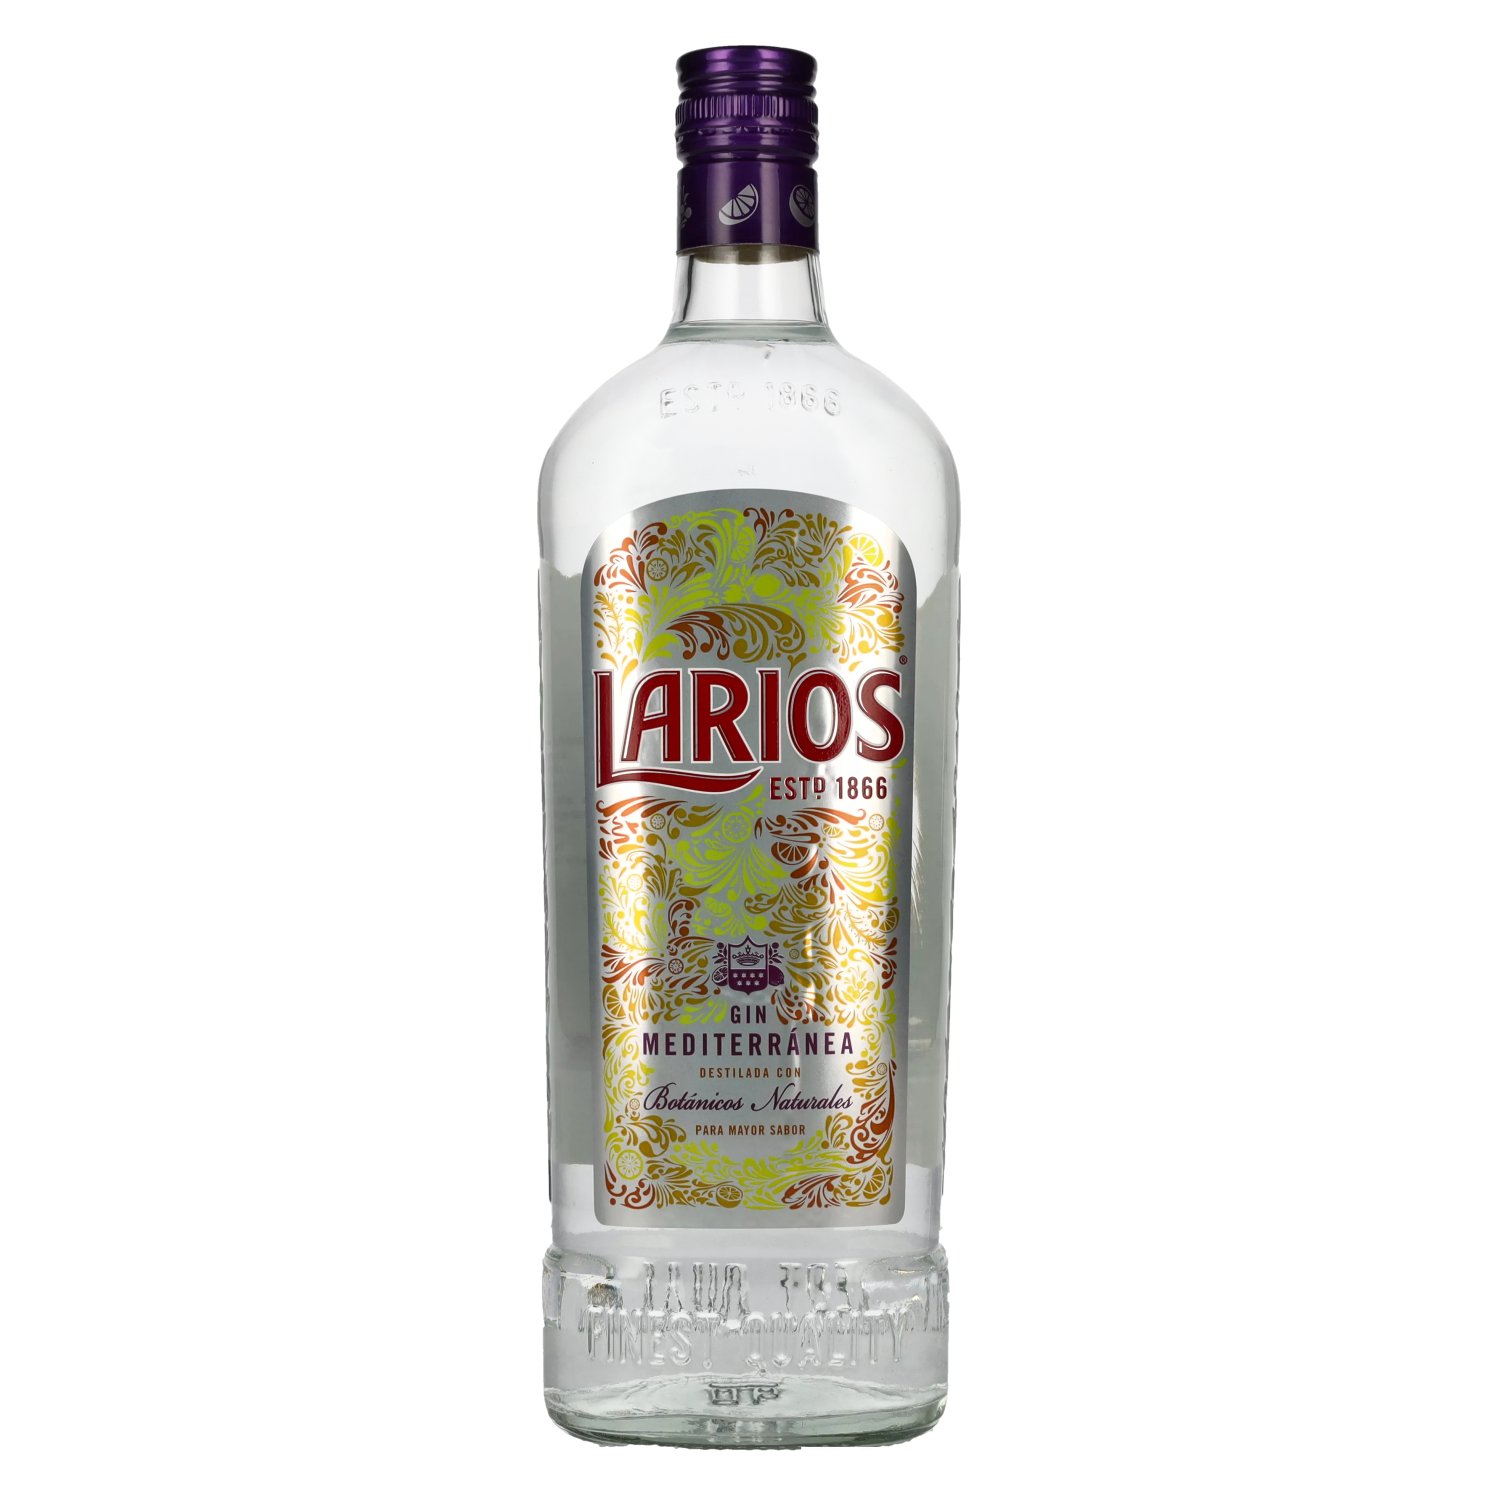 Larios Ginebra Mediterránea 37,5% Gin 1l Vol. Dry London